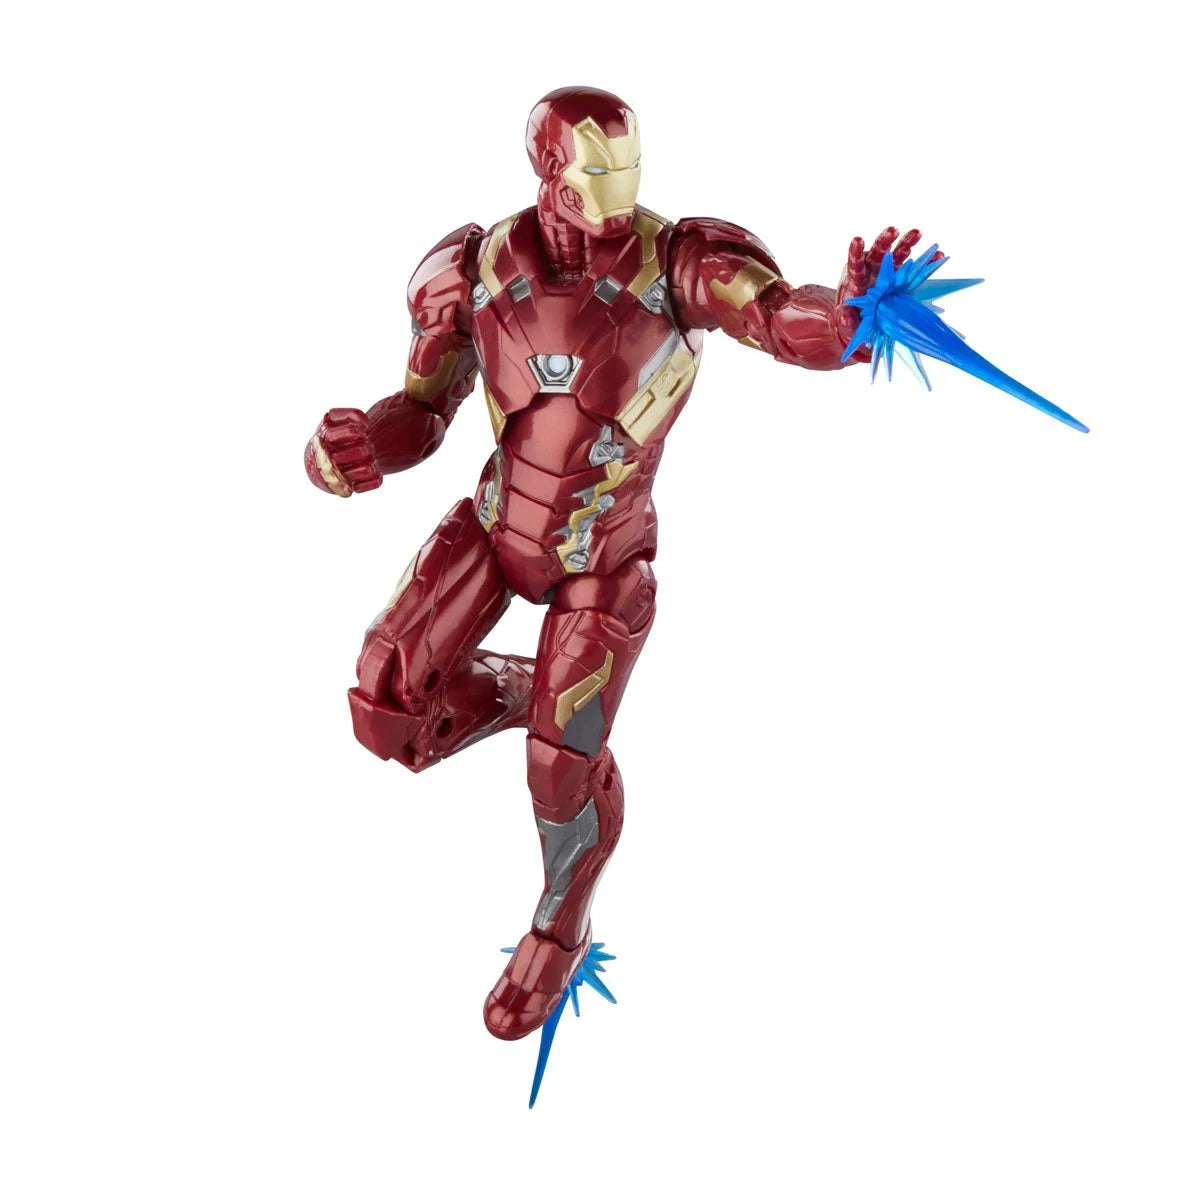 Captain America: Civil War Marvel Legends Iron Man Mark 46 6-Inch Action Figure